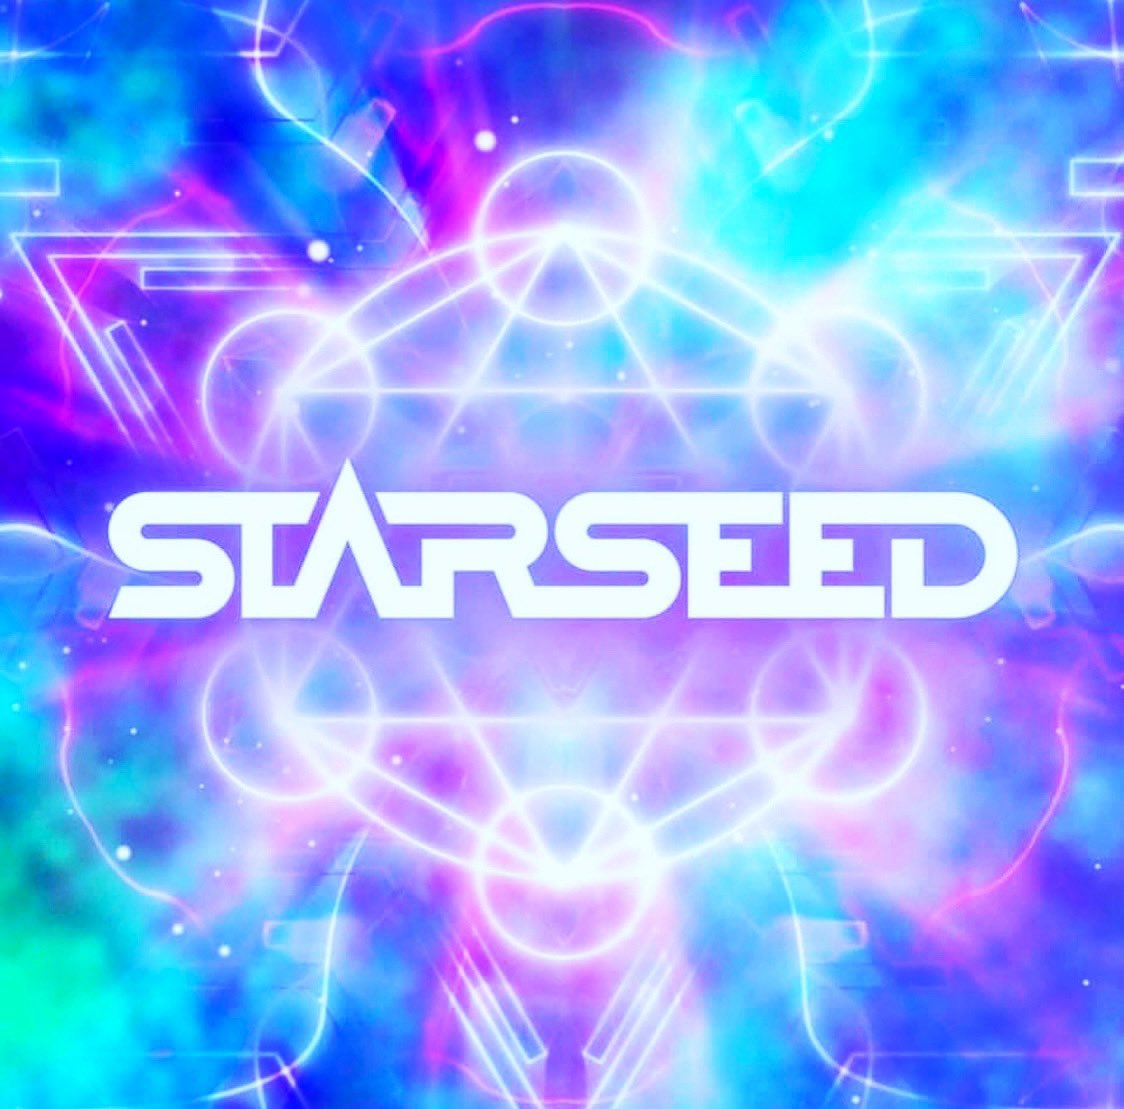 ⭐️ STARSEED ⭐️
#StarSeedArt #StarSeed #StarSeeds #StarSeedsUnite #StarSeedsAwaken #StarSeedAwakening #IndigoChild